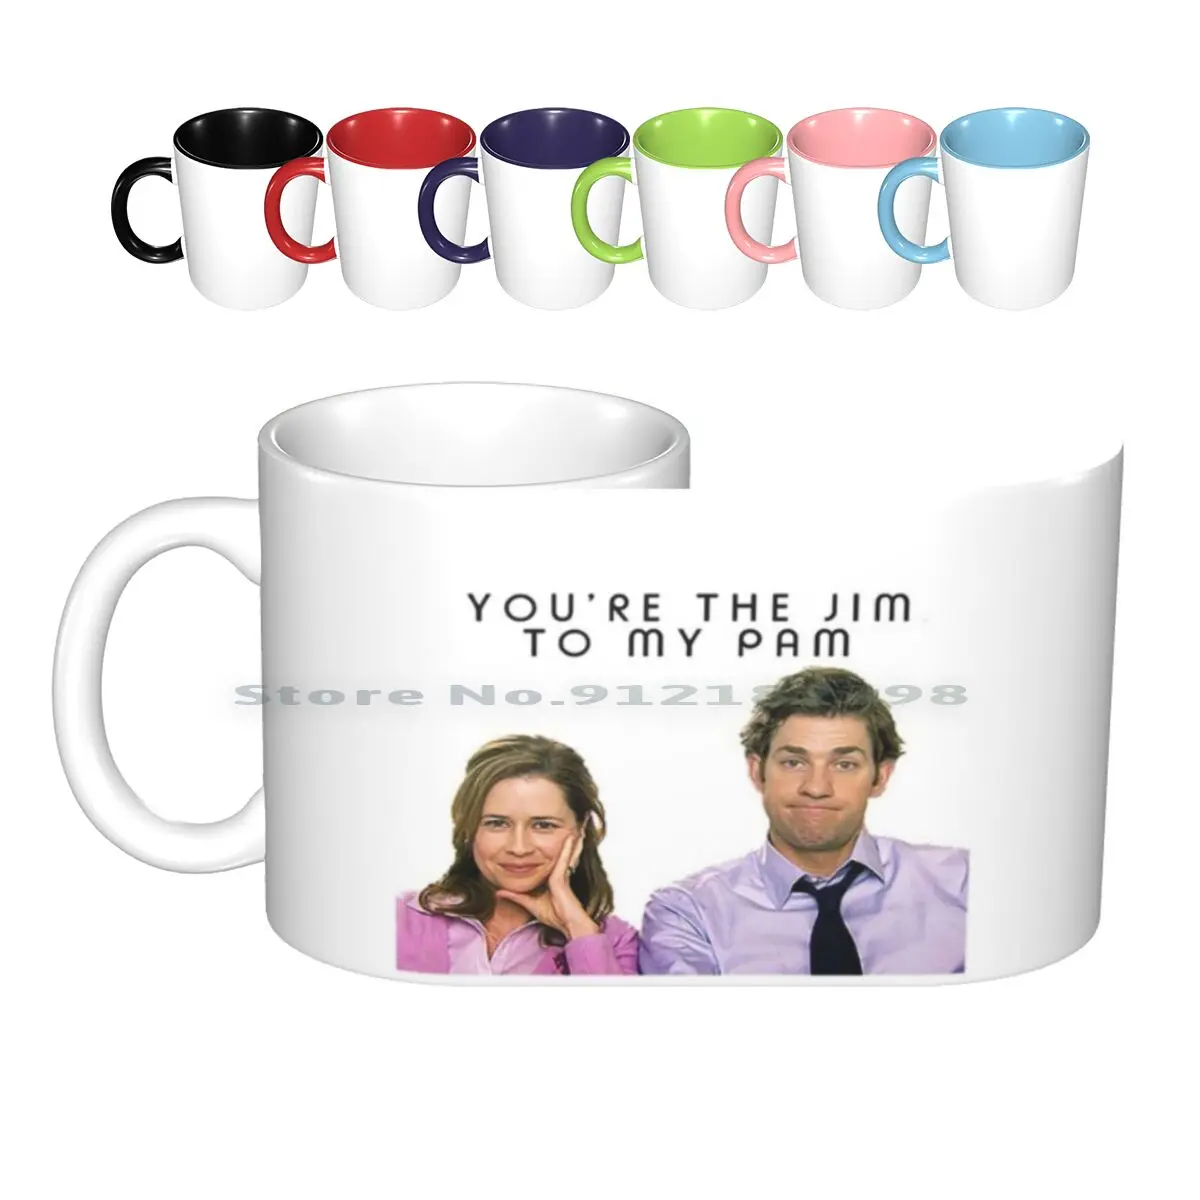 

Jim To My Pam Ceramic Mugs Coffee Cups Milk Tea Mug The Office Office Jim Pam Jim Halpert Pam Beesly Pam Beesley Jim And Pam